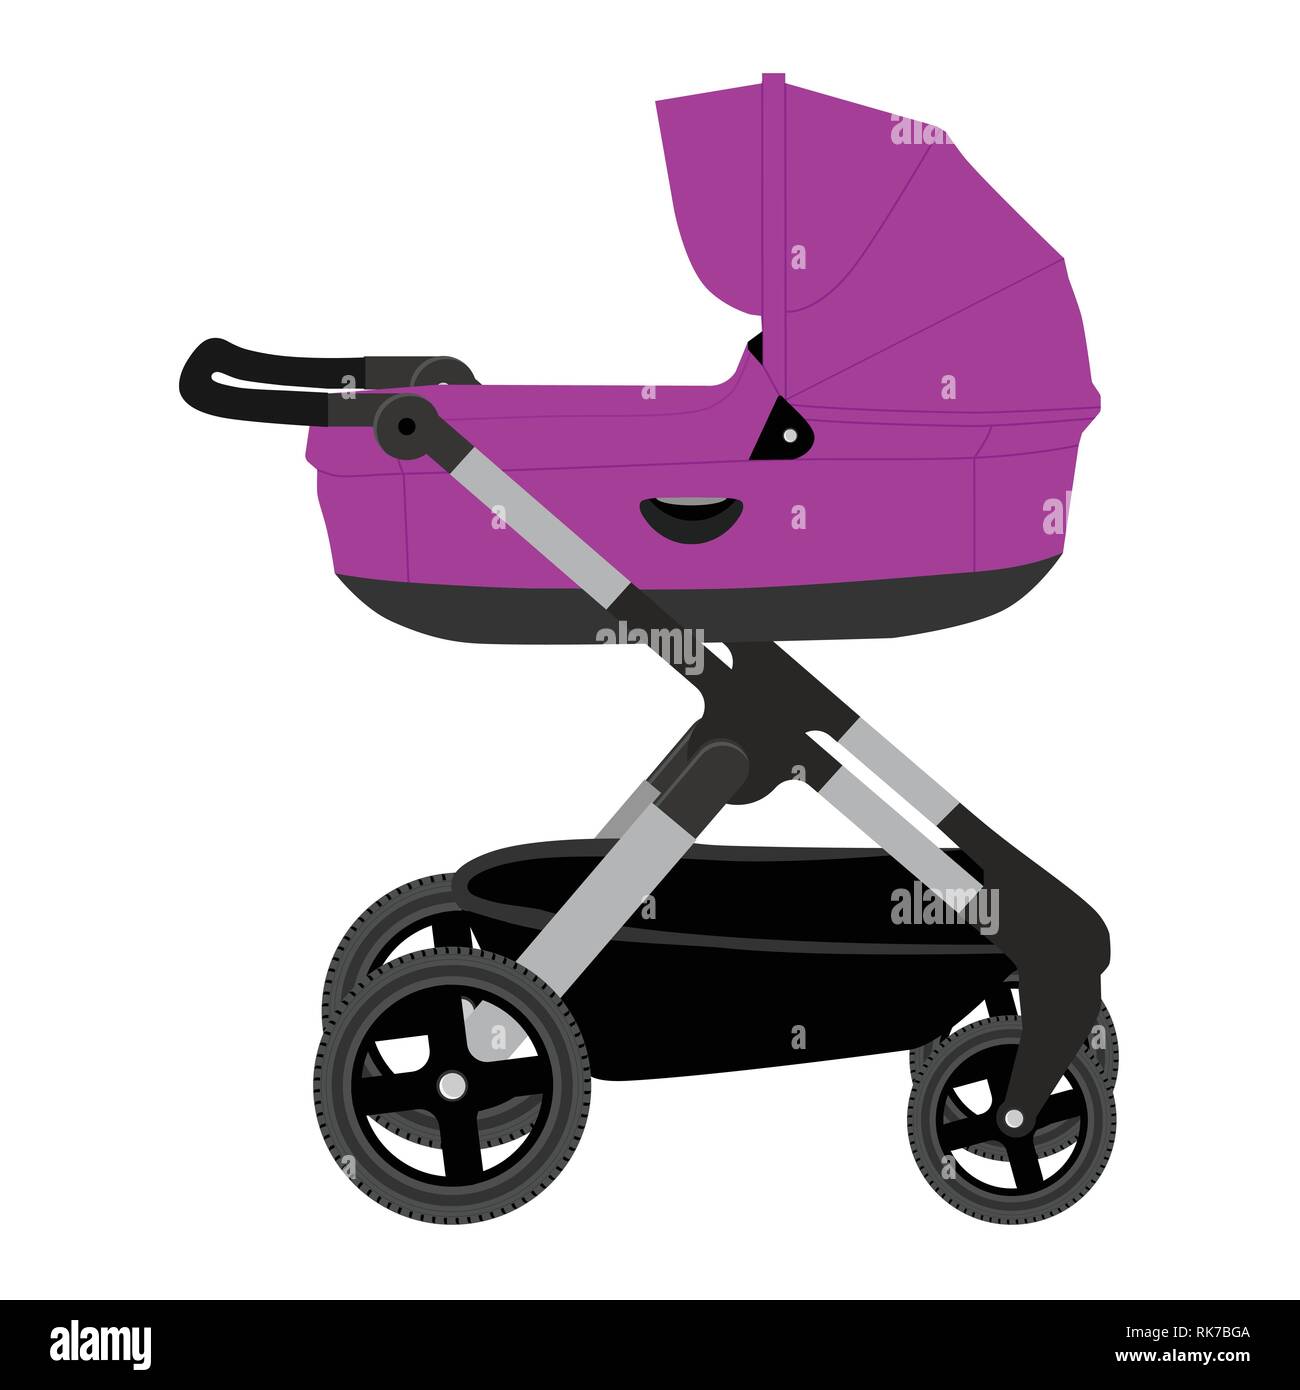 purple pushchairs buggies